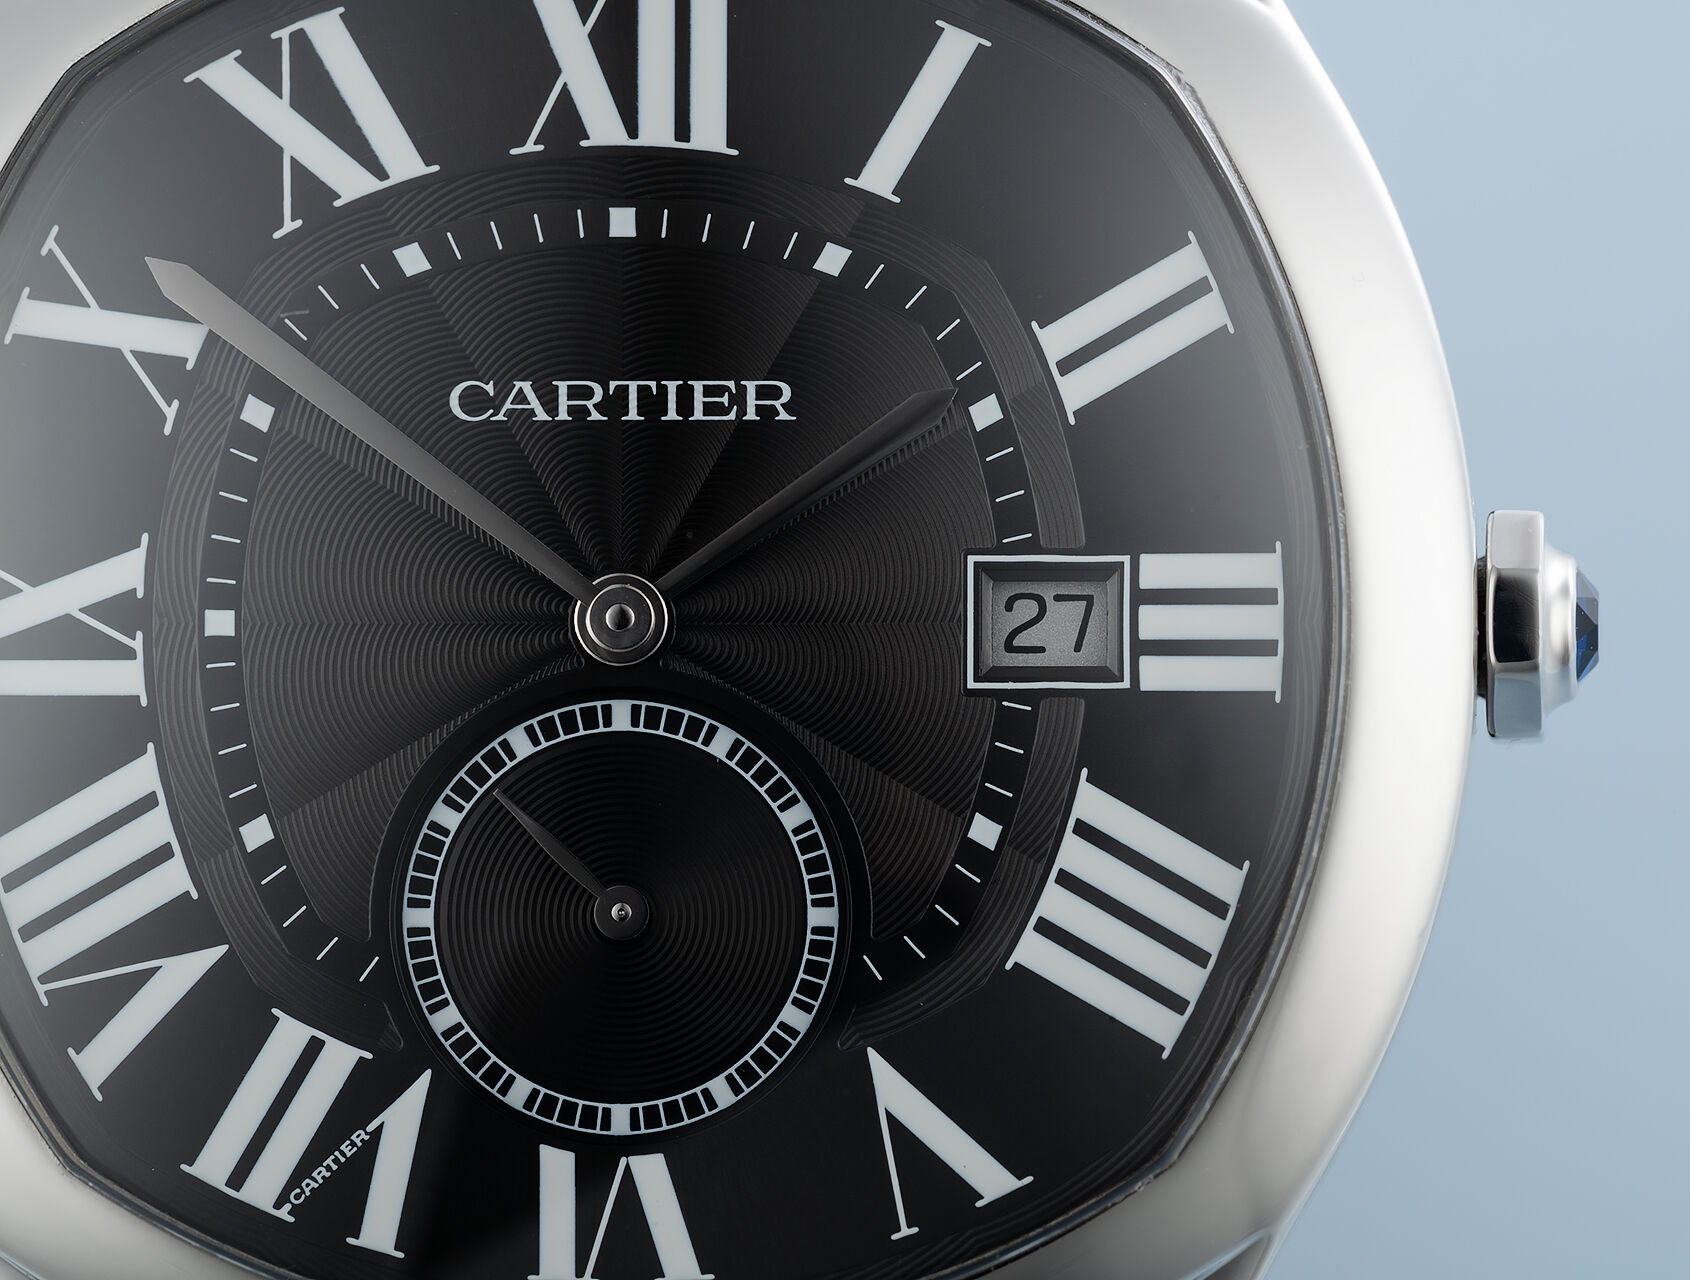 ref WSNM0009 | Box & Certificate  | Cartier Drive De Cartier